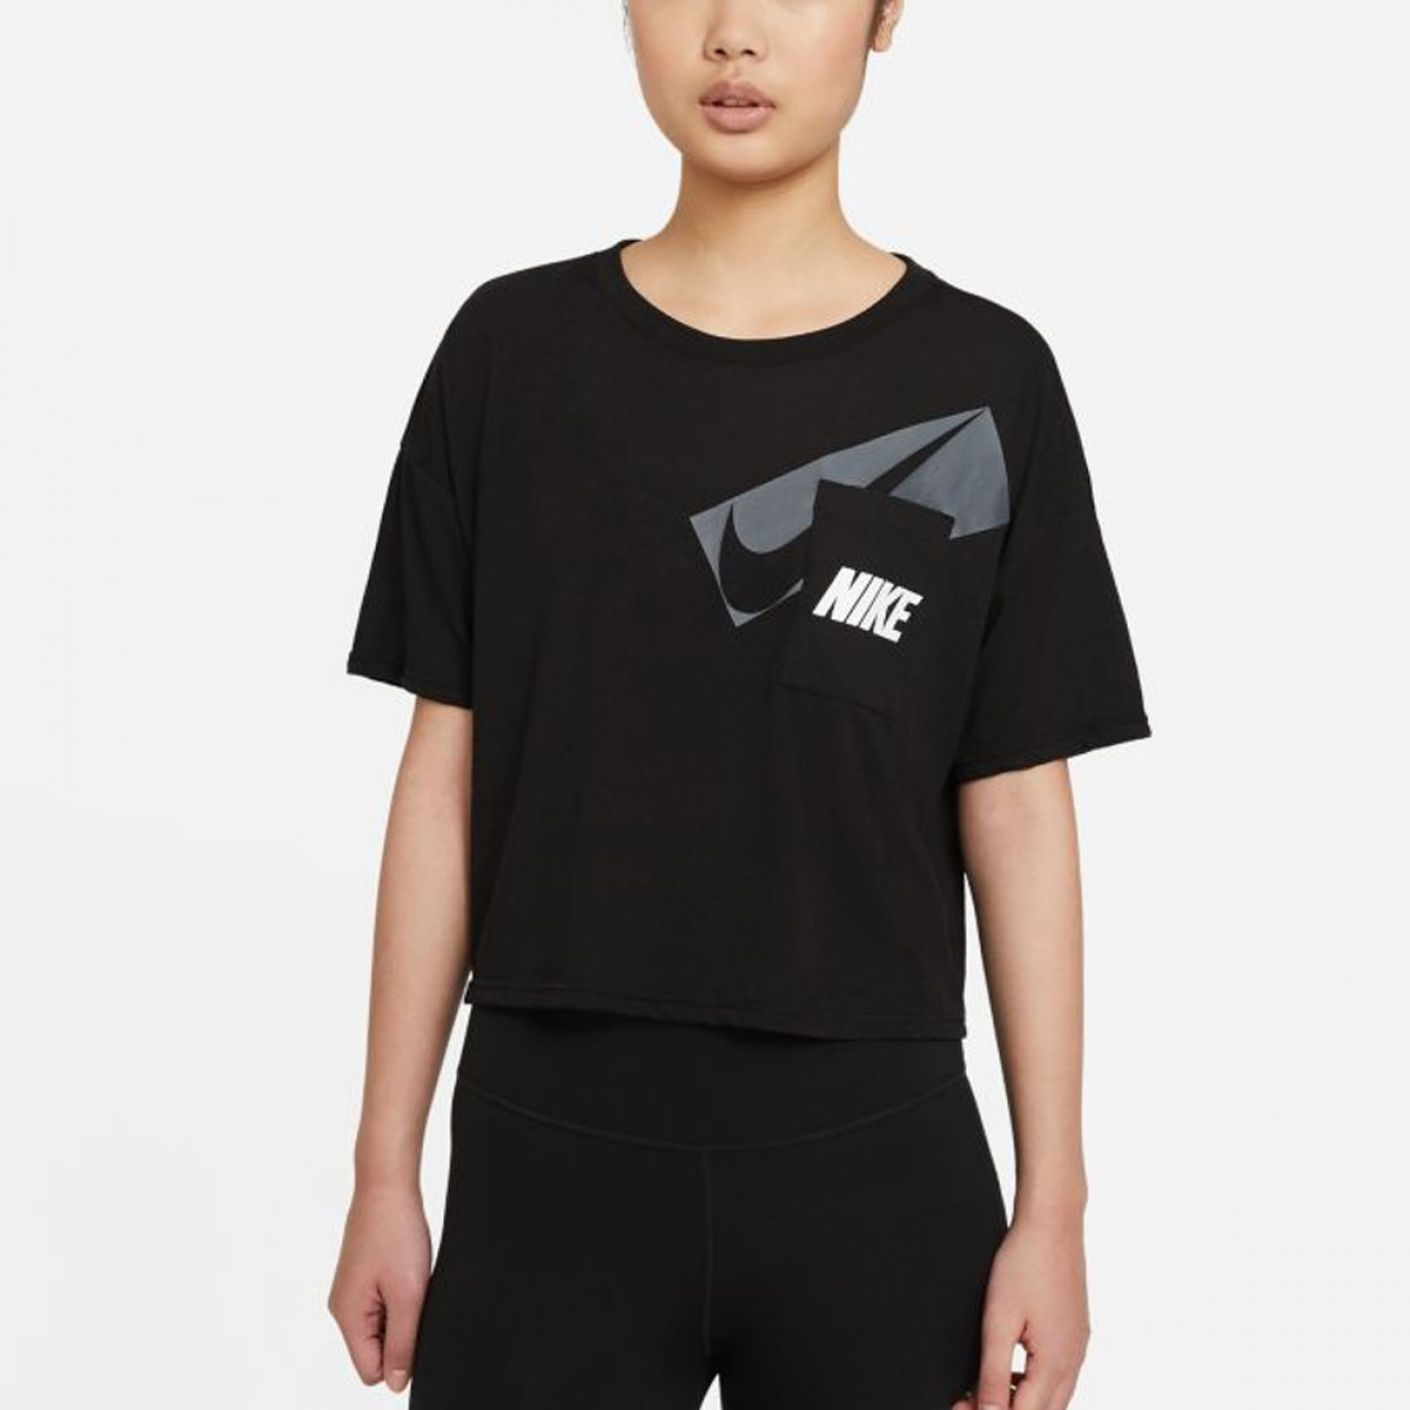 Nike Women's Dri-Fit Black T-shirt